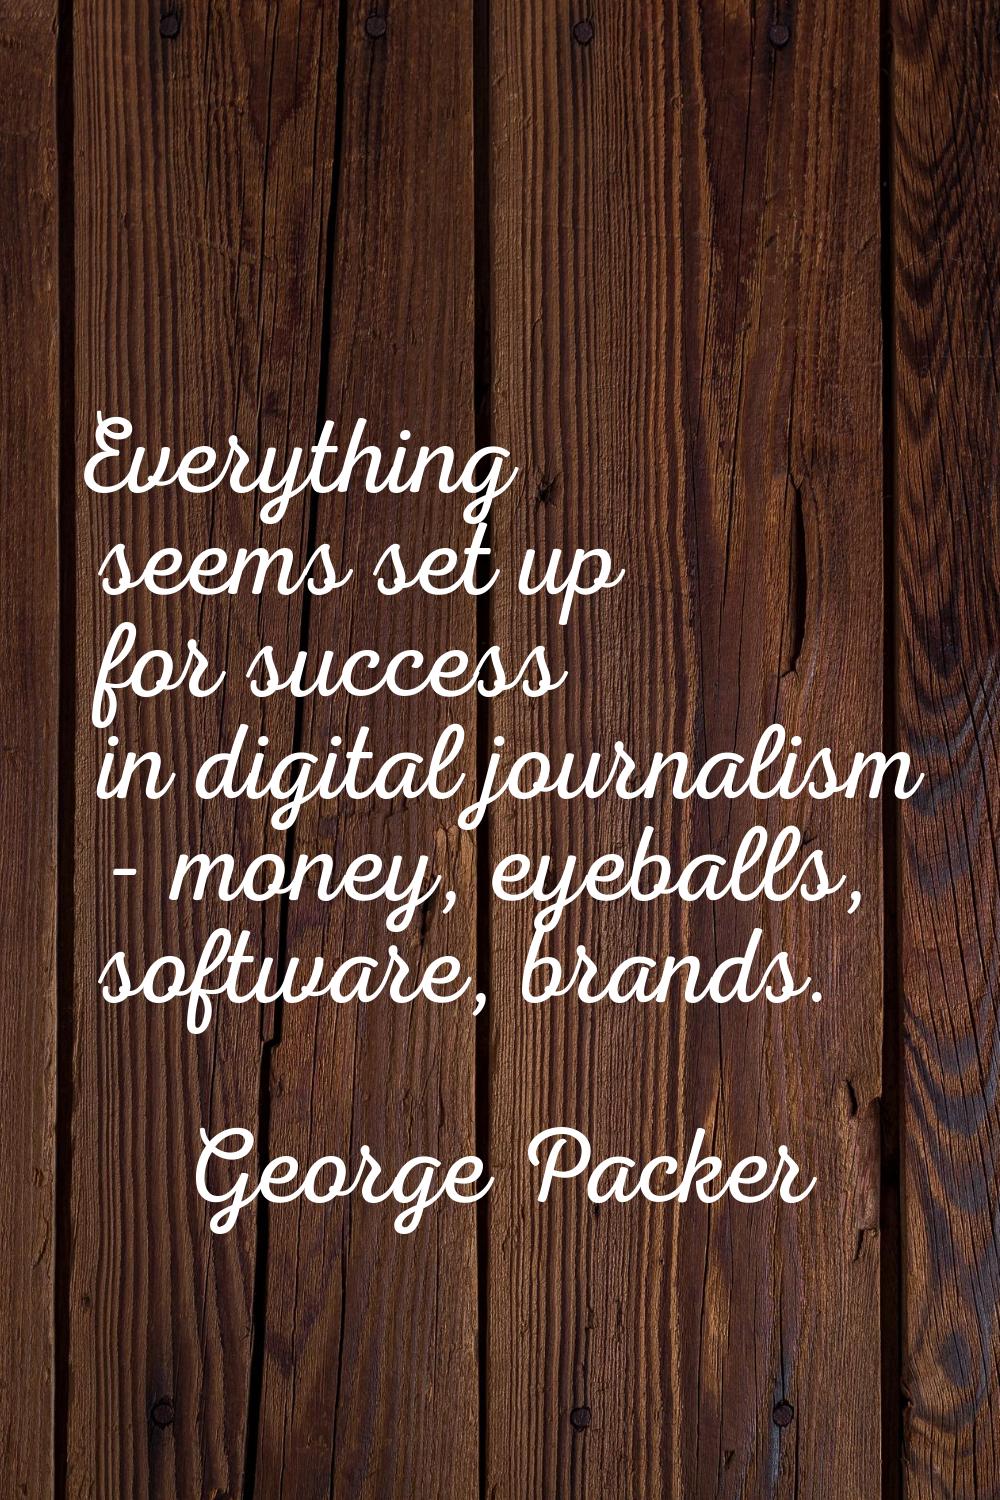 Everything seems set up for success in digital journalism - money, eyeballs, software, brands.